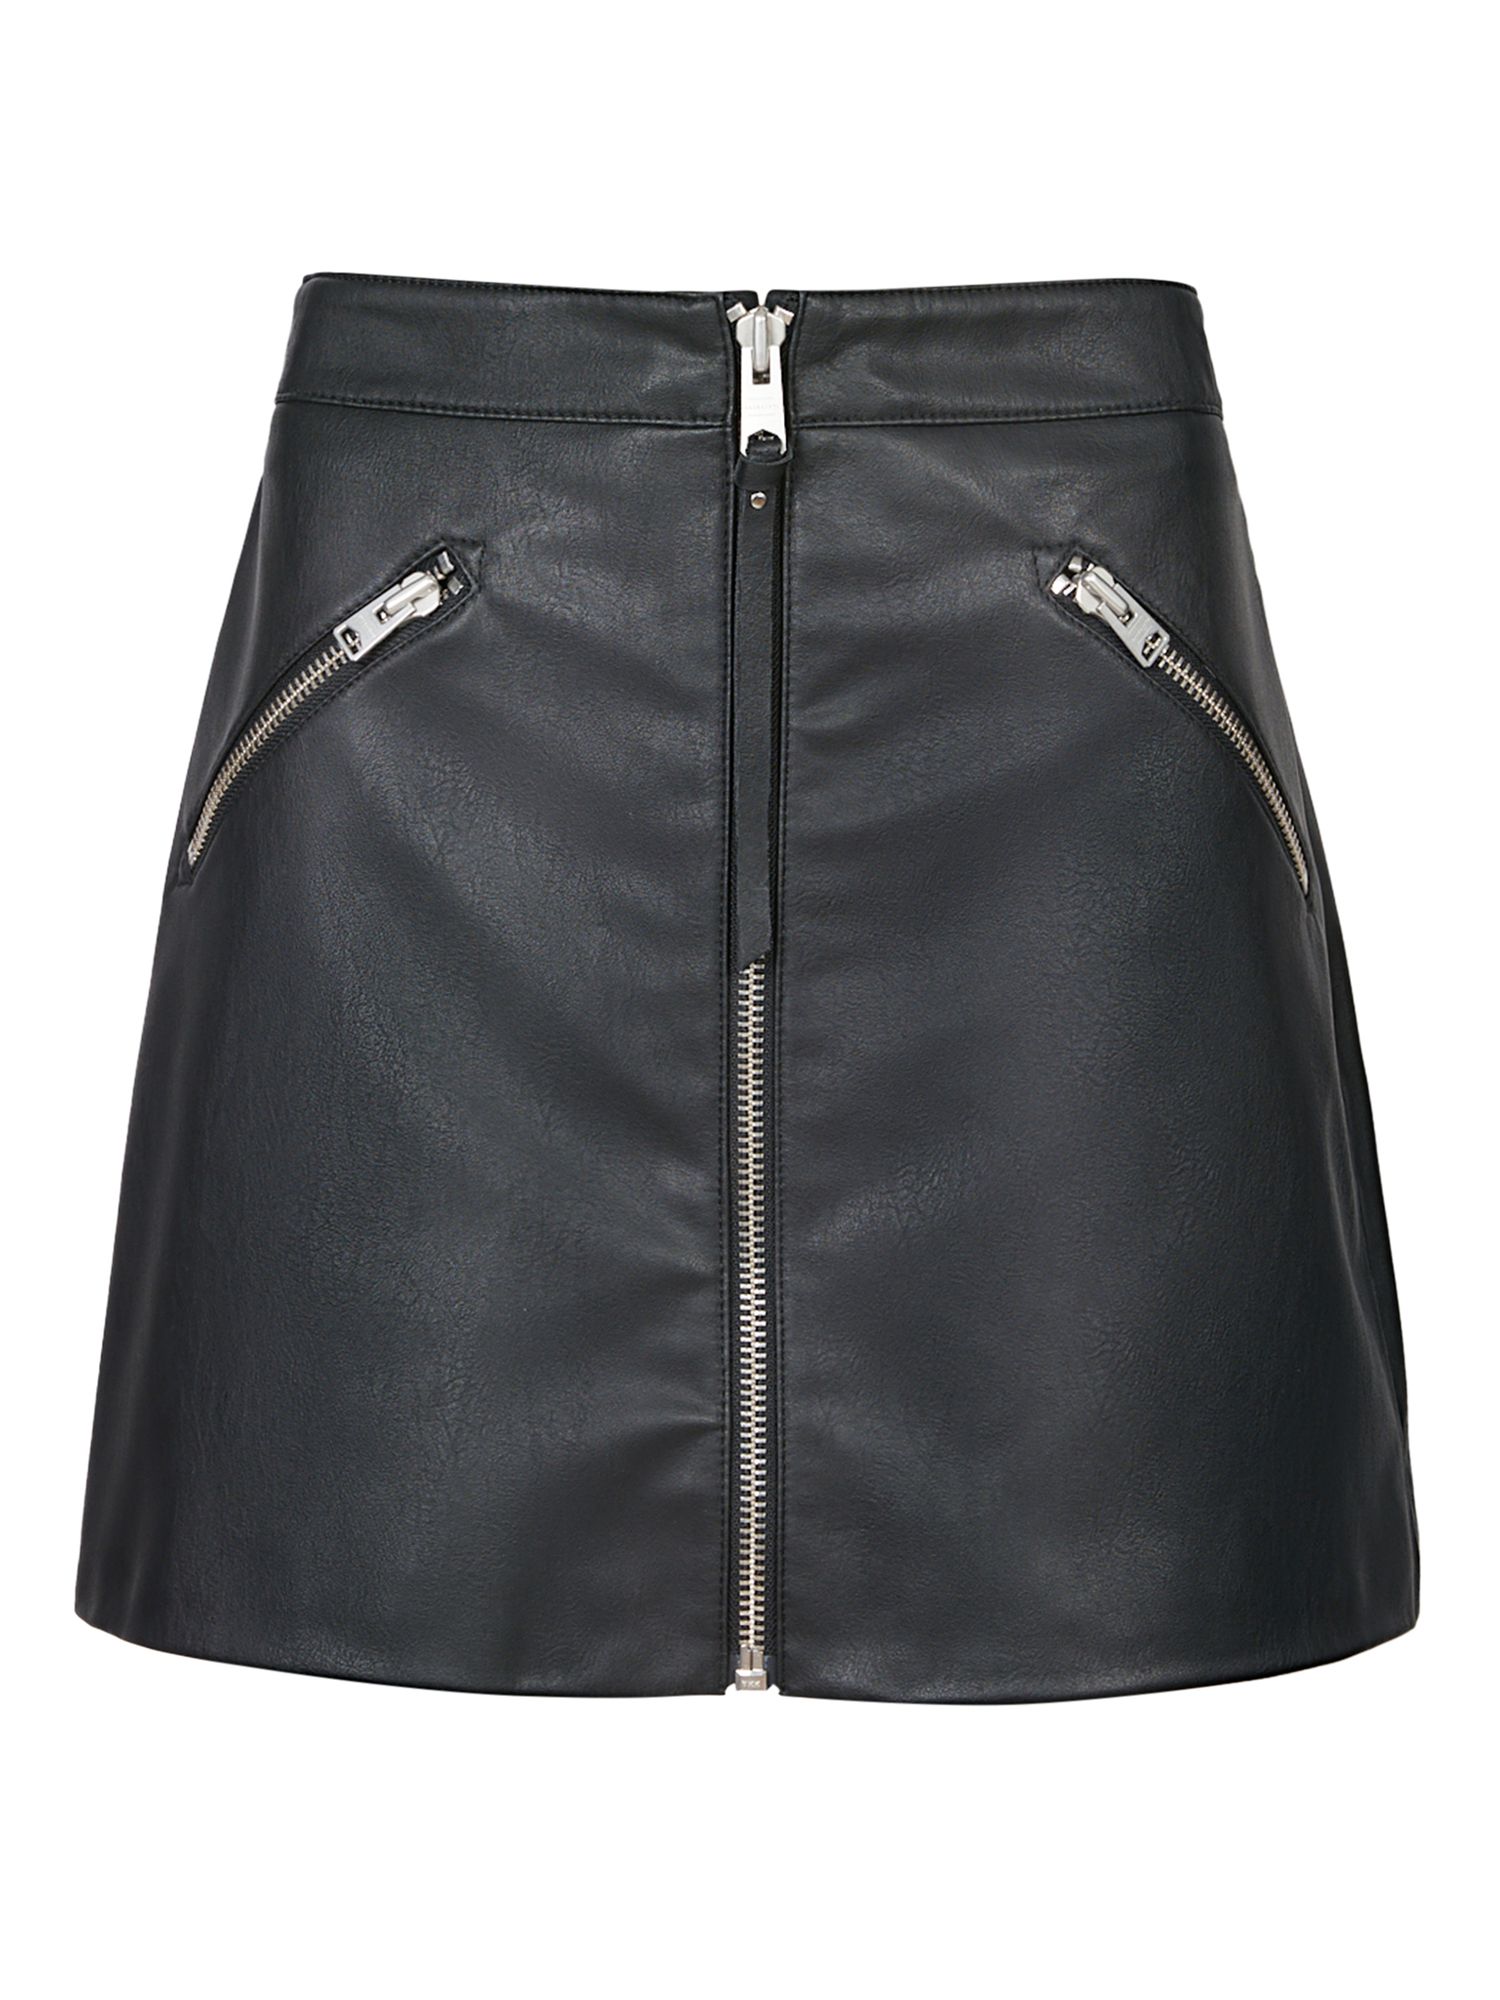 AllSaints Piper Faux Leather Skirt, Black at John Lewis & Partners